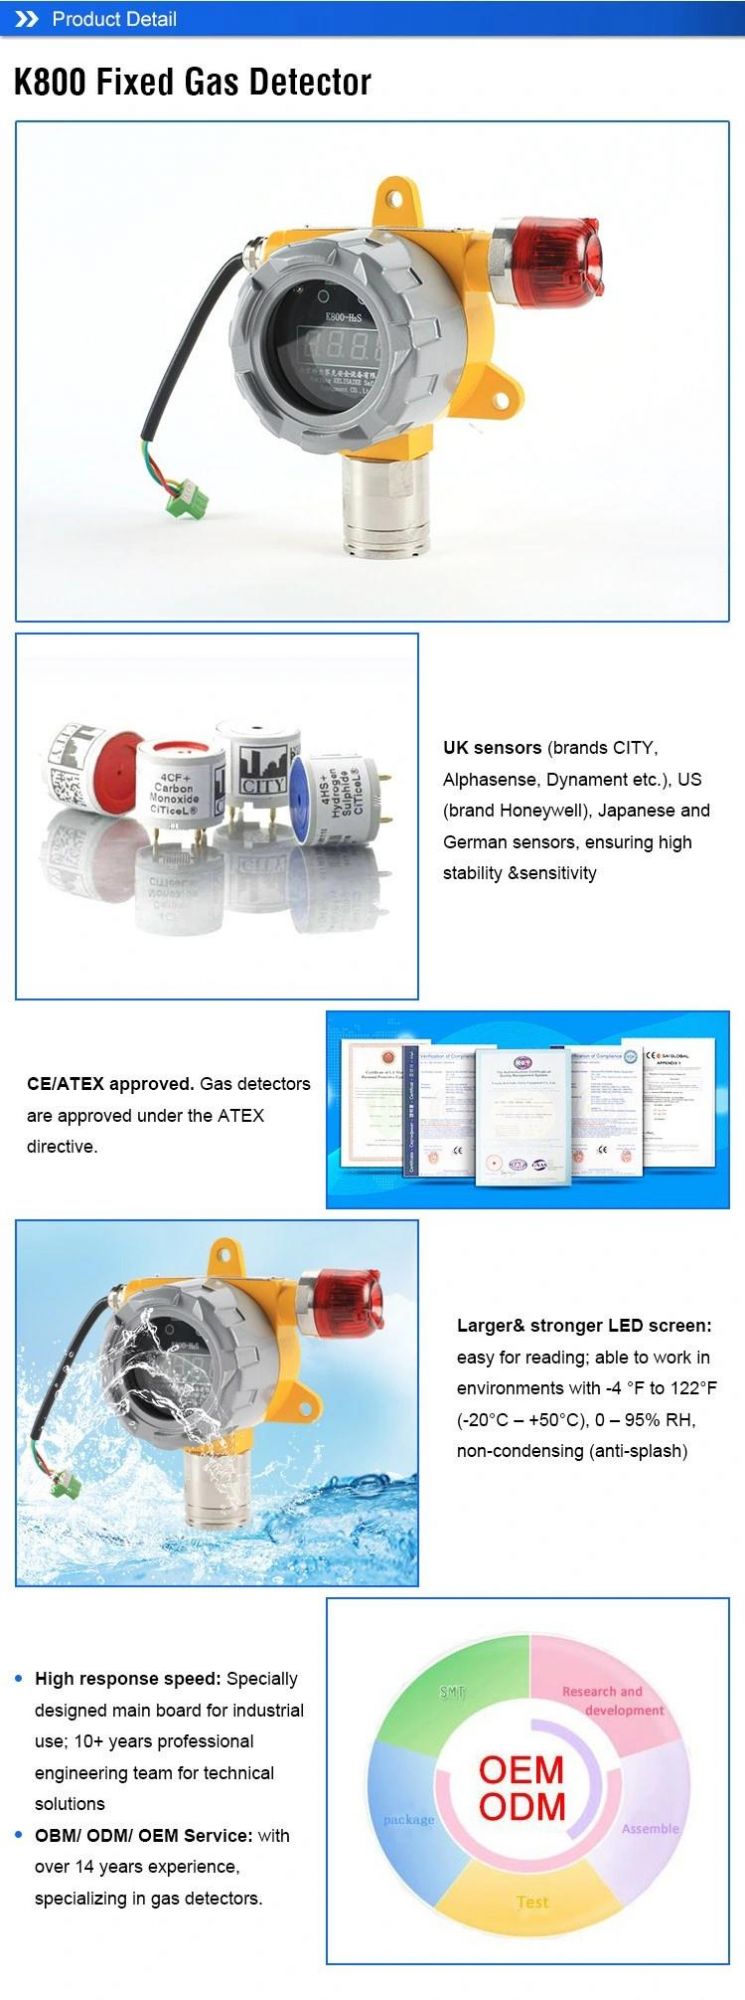 New Gas Alarm Personal Saferty Machine K800 Fixed4-20mA Signal Output Ethylene Gas Leak Detector